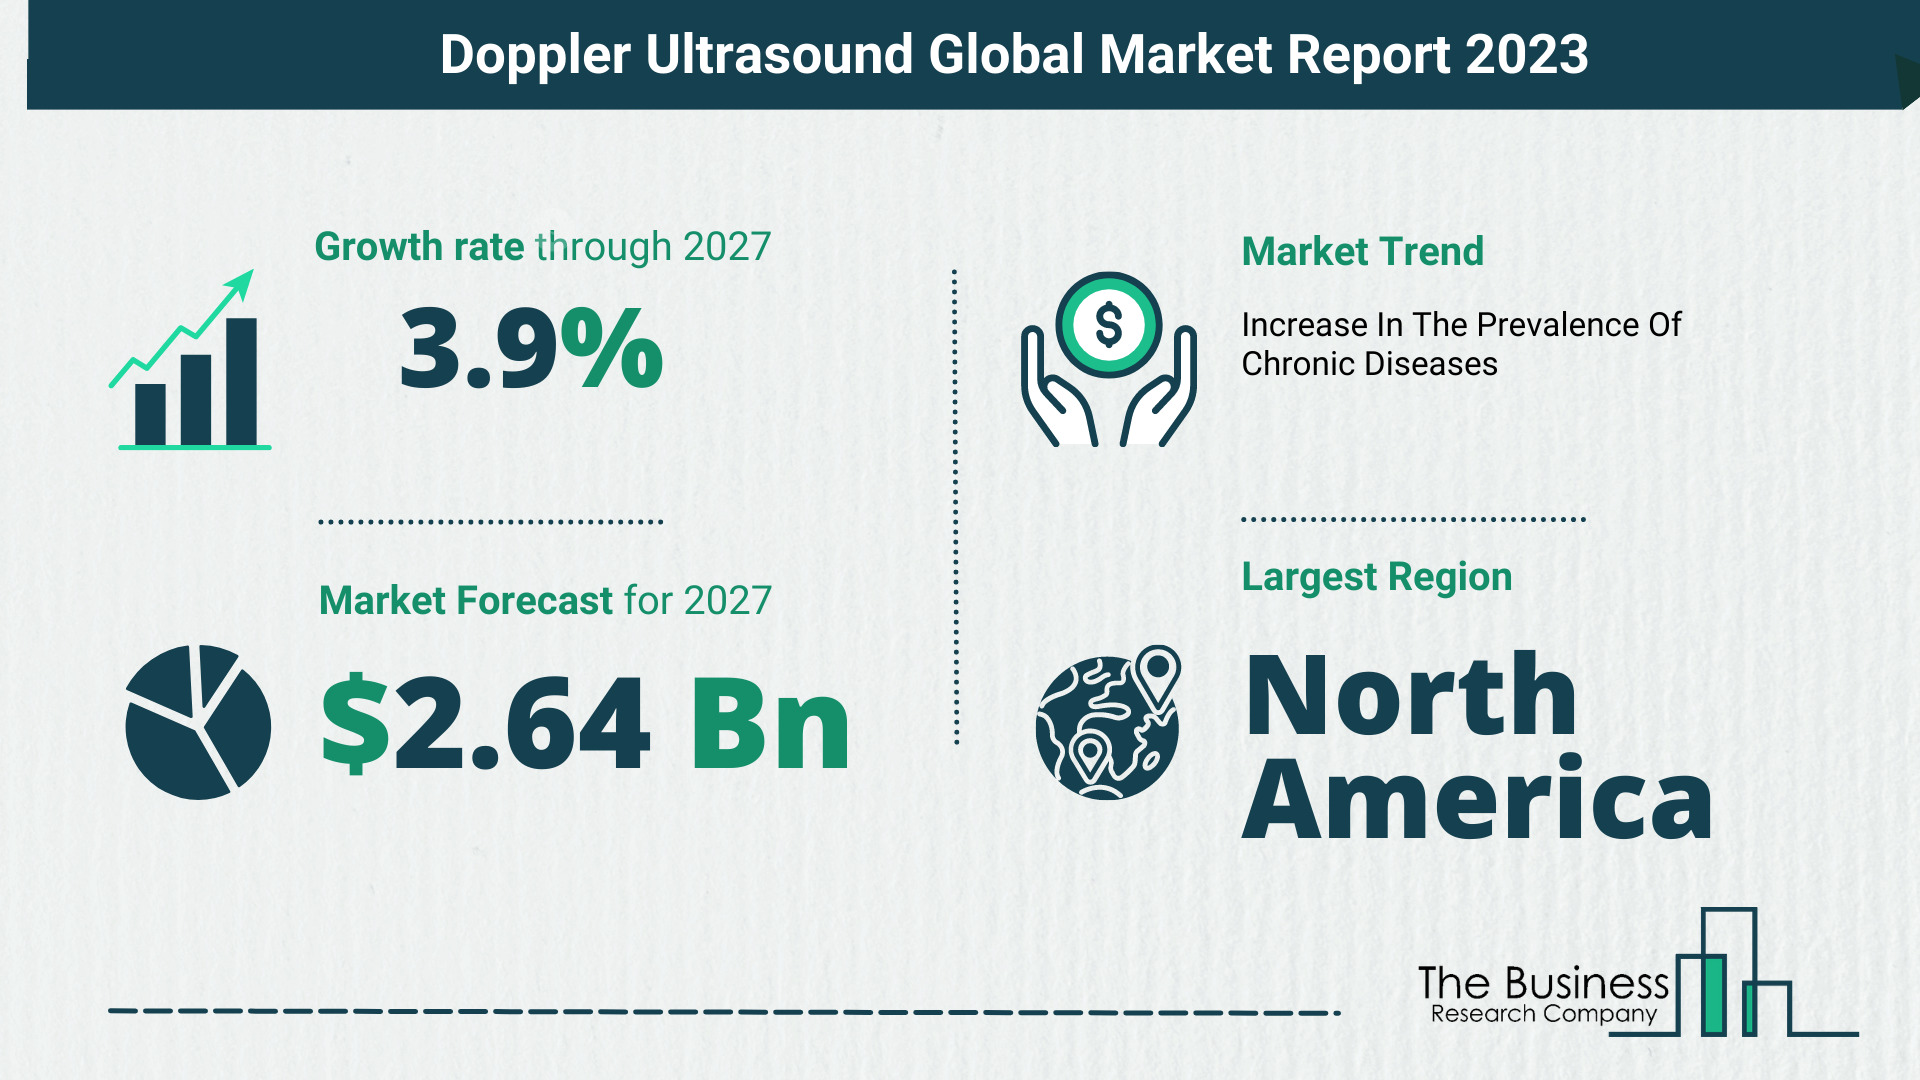 Global Doppler Ultrasound Market Opportunities And Strategies 2023